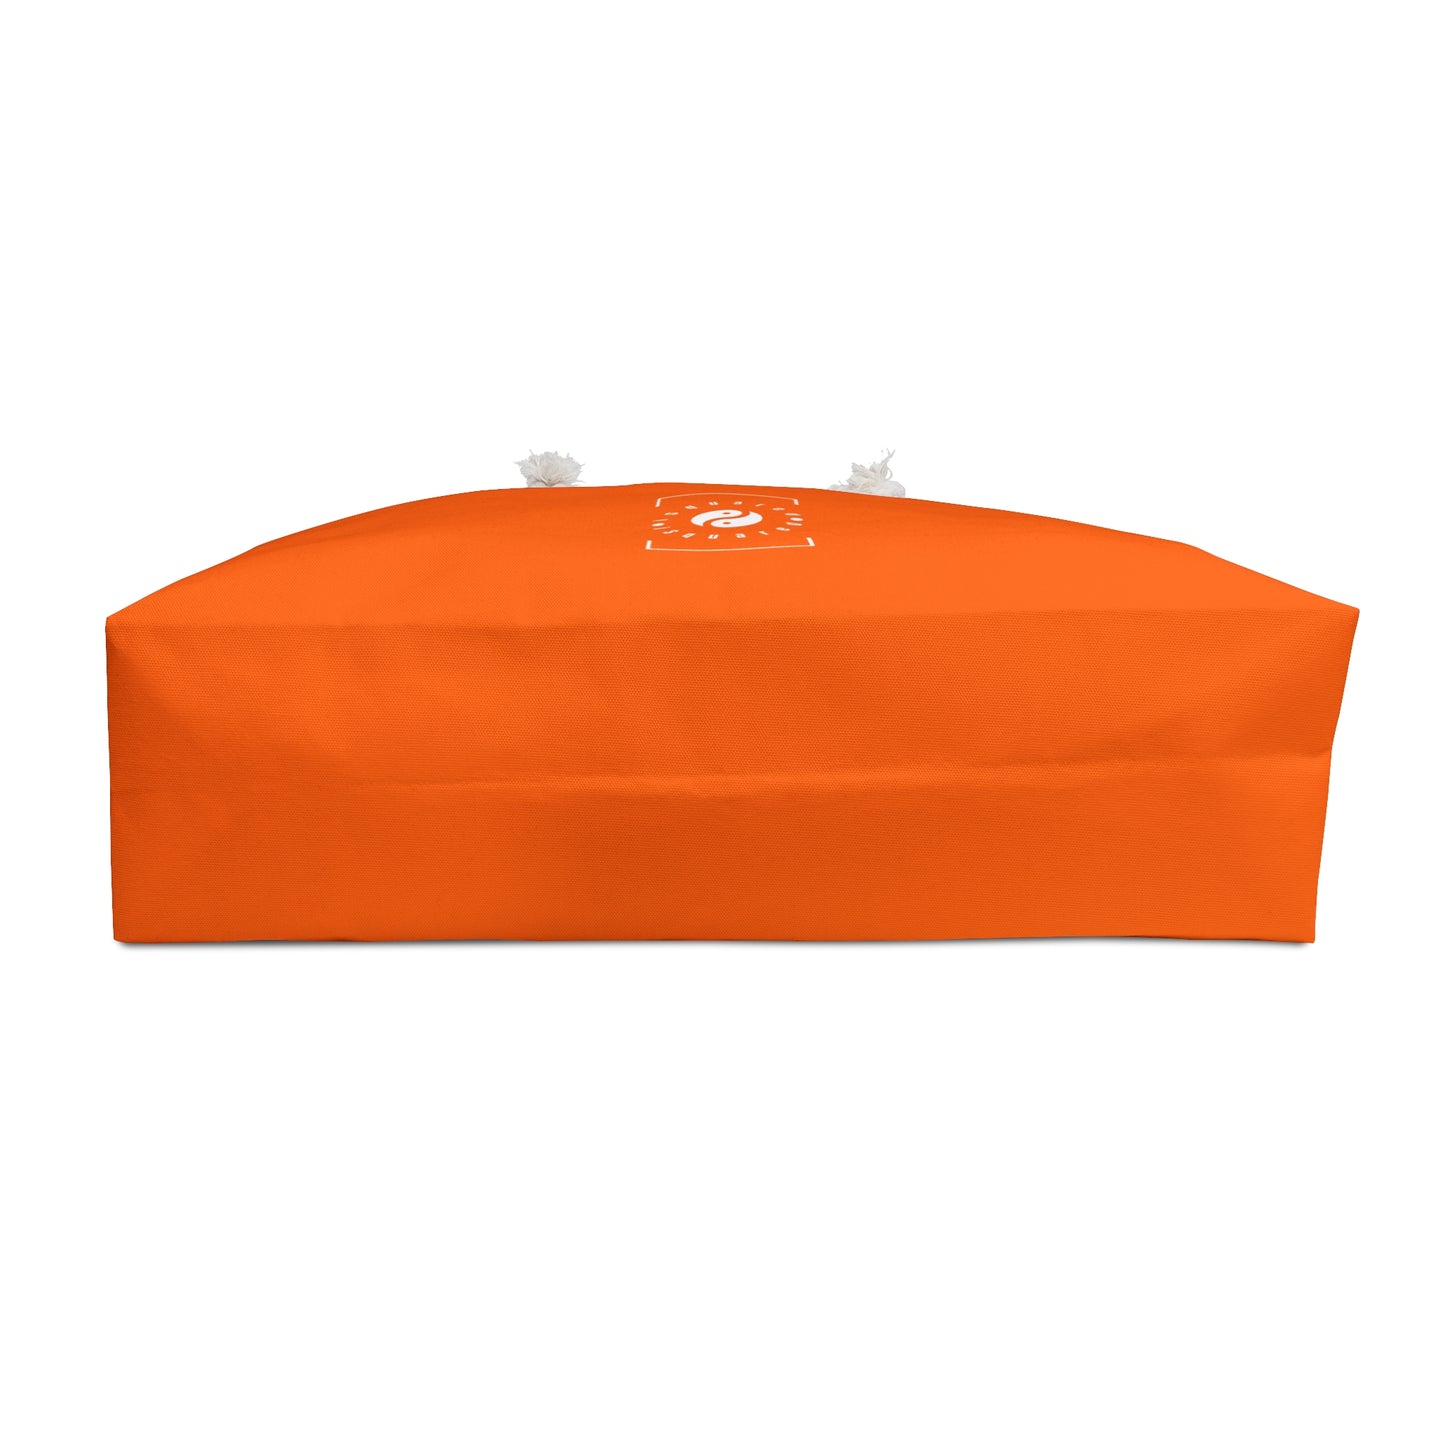 Neon Orange #FF6700 - Casual Yoga Bag